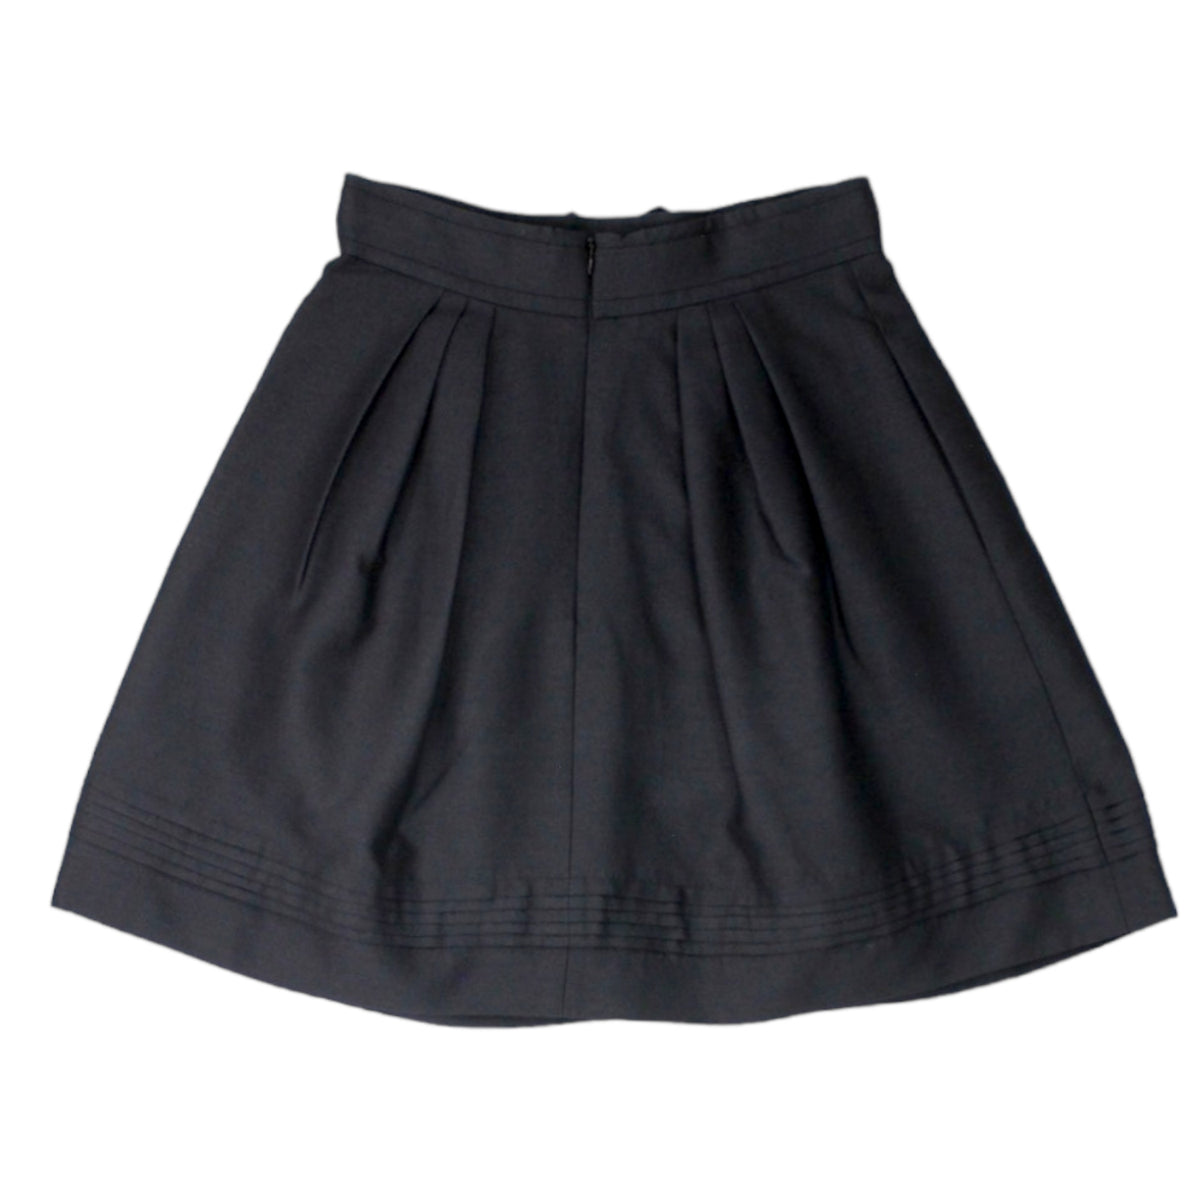 Orla Kiely Black Silk Wool Organza Skirt